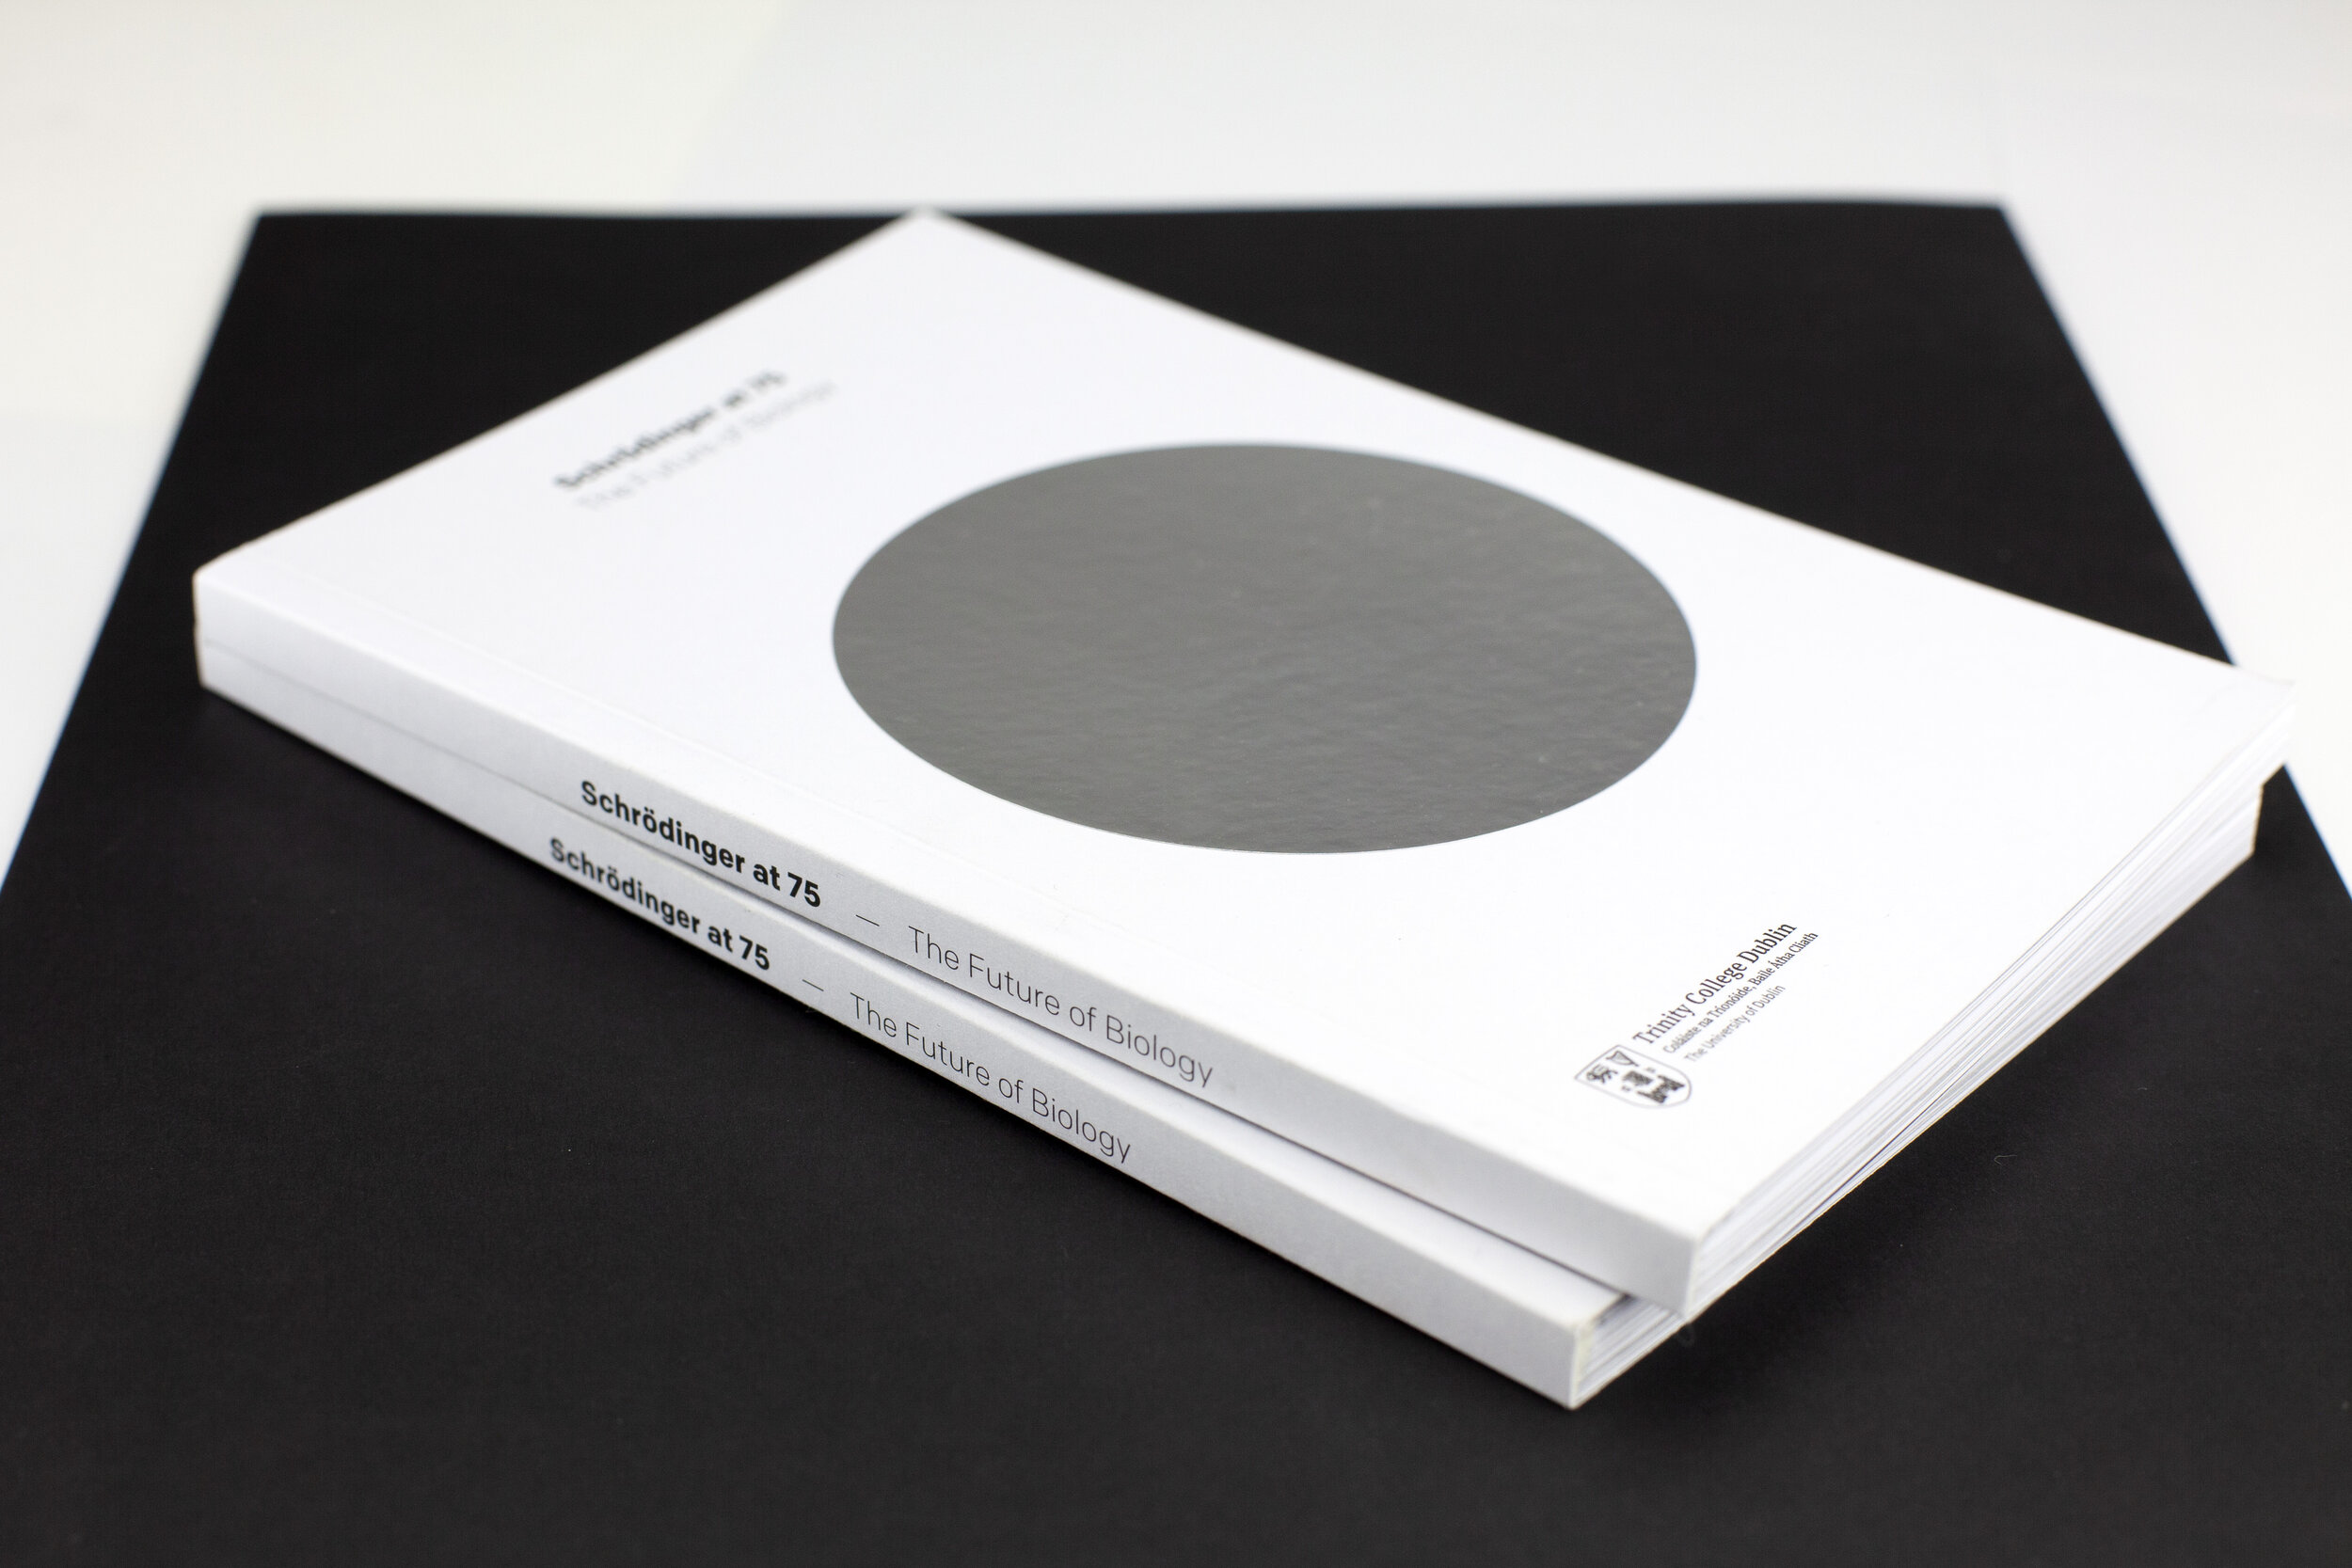 graphic-design-schrodinger-event-design-book-publication-print-identity.jpg